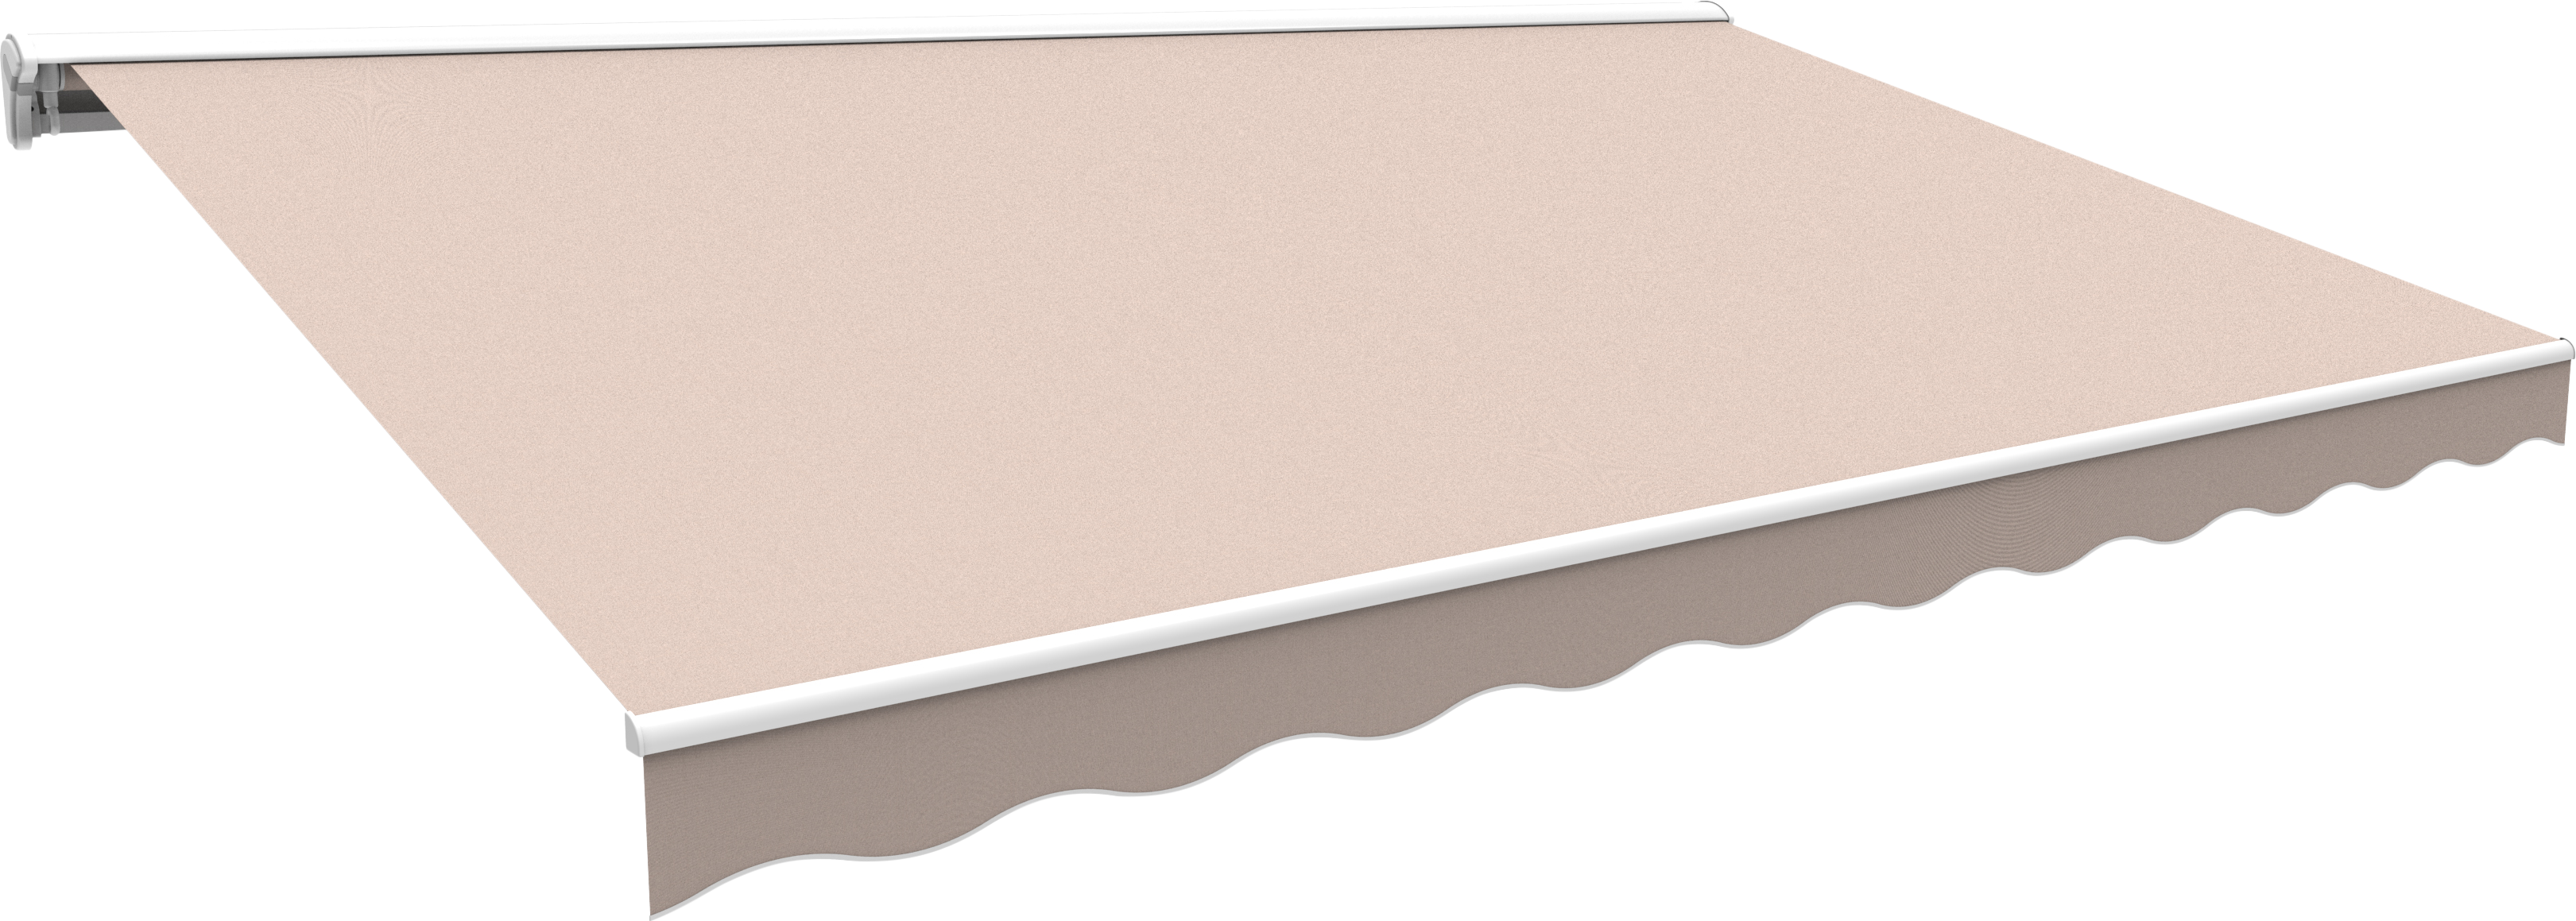 Tela políester essencial beige para toldo en kit kronos de 4x2.5 m